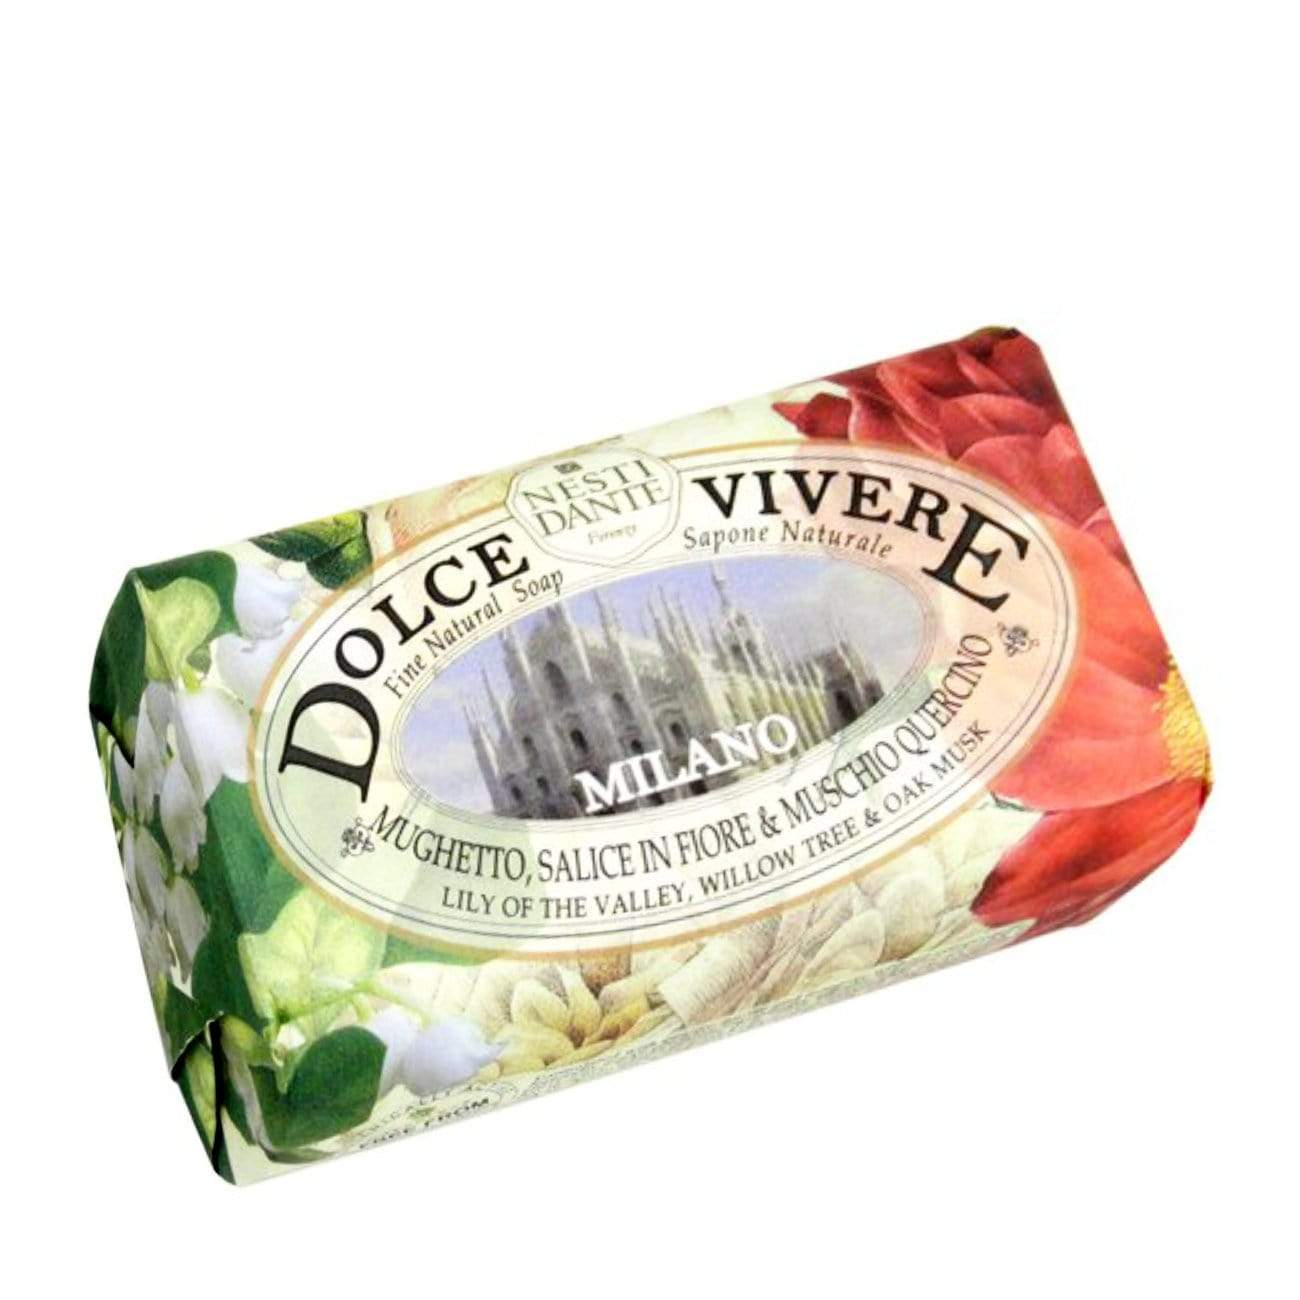 Saponeria Nesti Firenze: Capri Perfumed Fine Natural Soap, Dolce Vivere  Line 8.8 Ounces (250g) Packages (Pack of 3) [ Italian Import ]